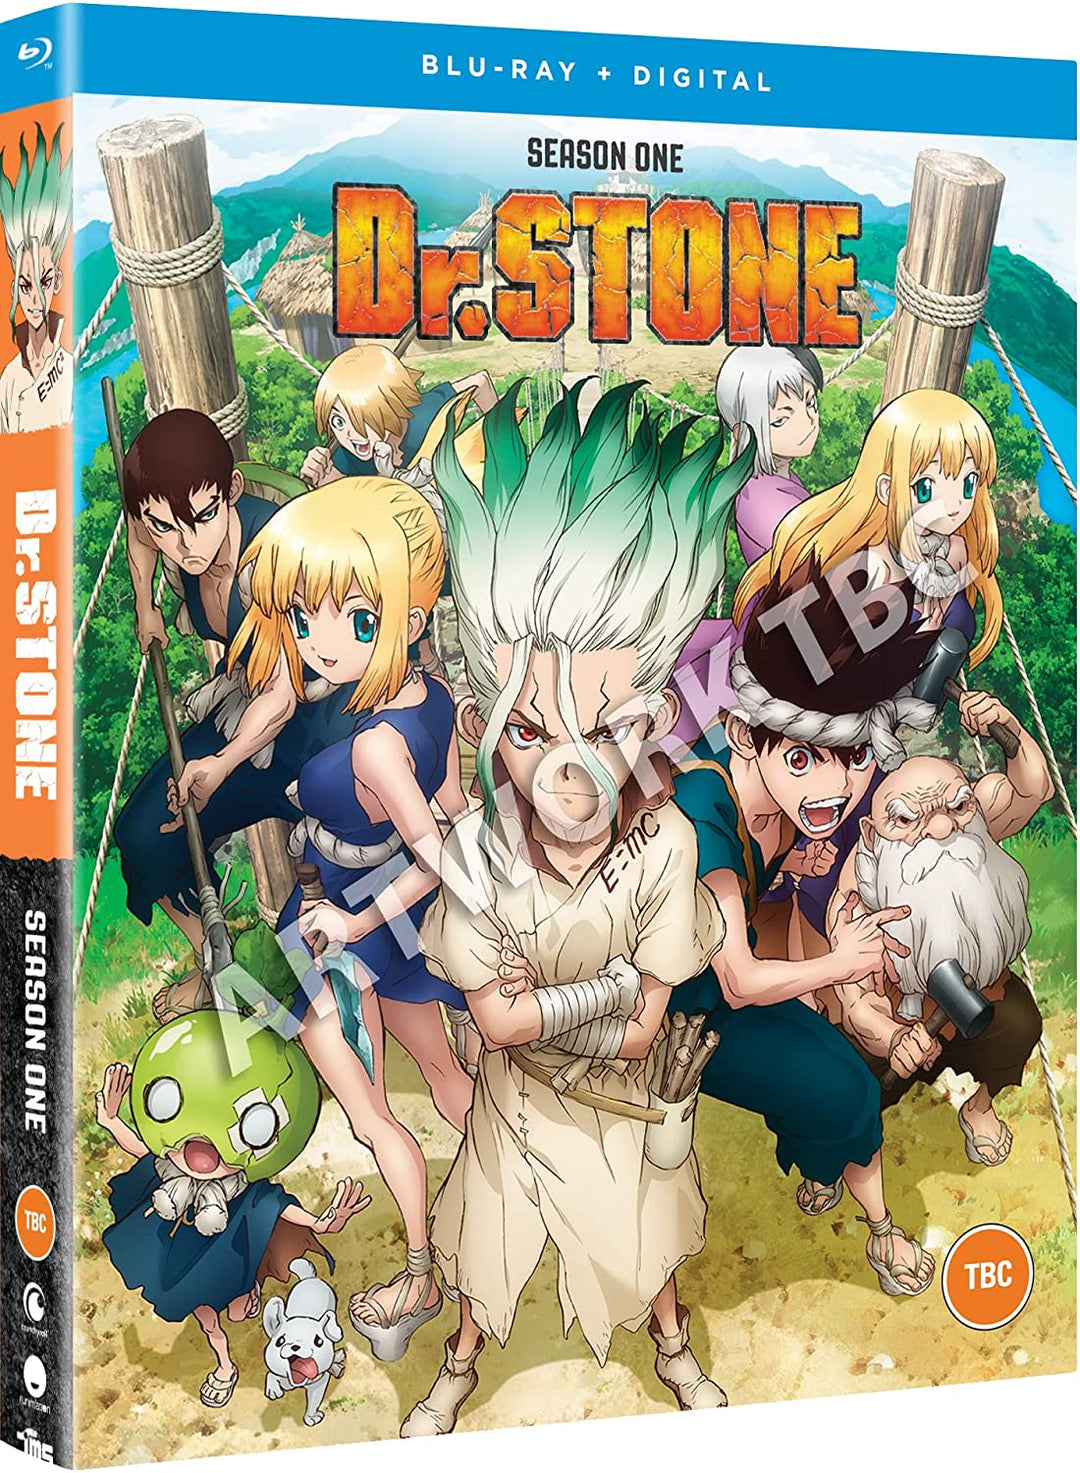 Dr. Stone - Season 1 Complete - Blu-ray + Free Digital Copy - [Blu-ray]